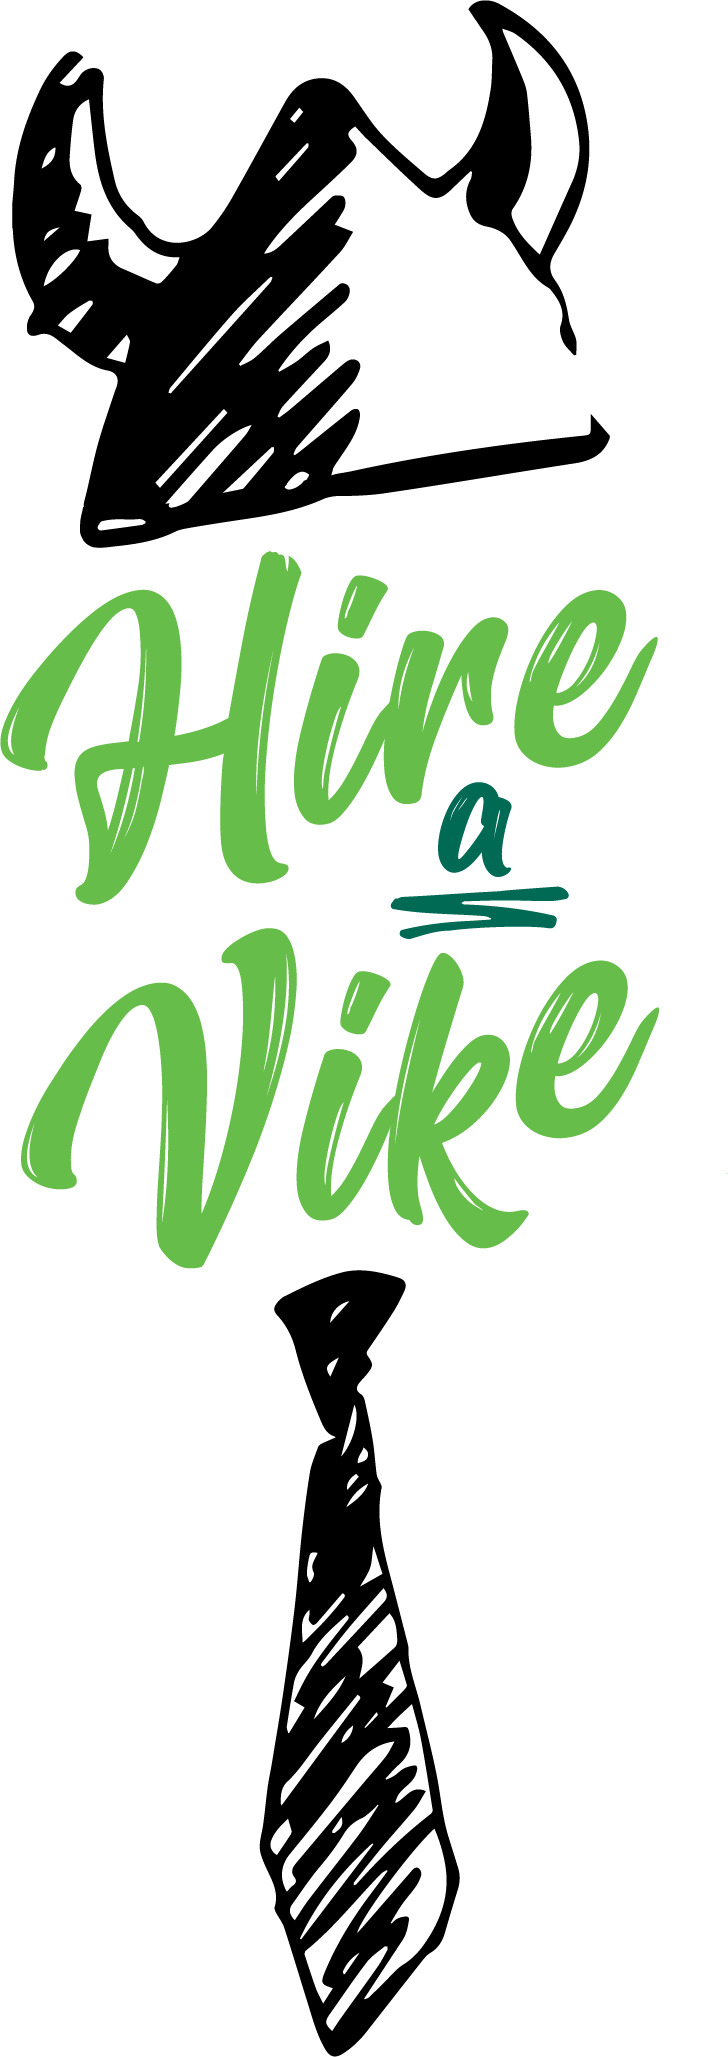 Hire a Vike logo